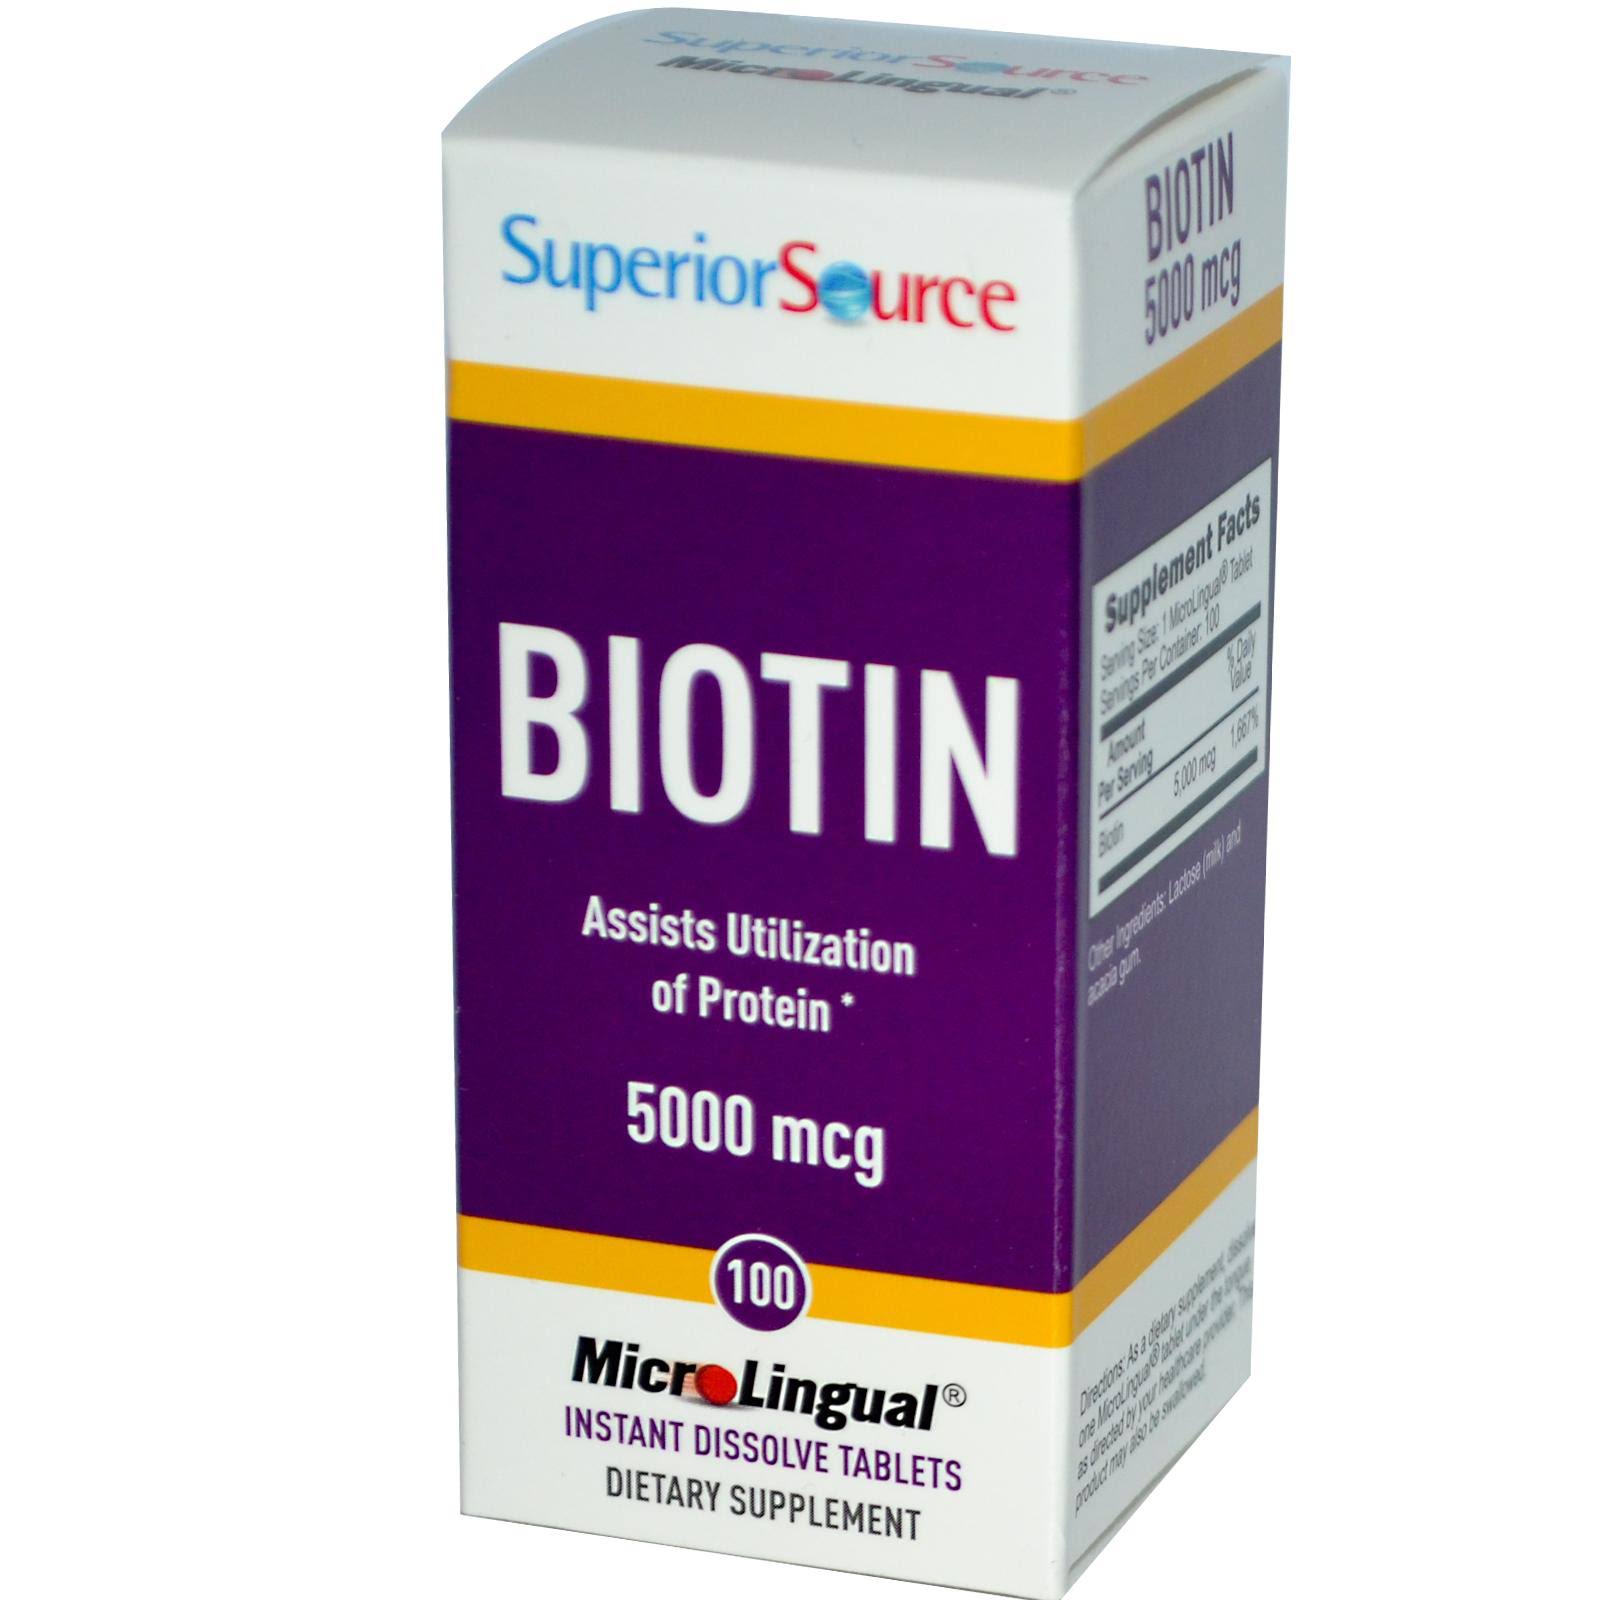 Superior Source Biotin 5000 mcg - 100 Tablets